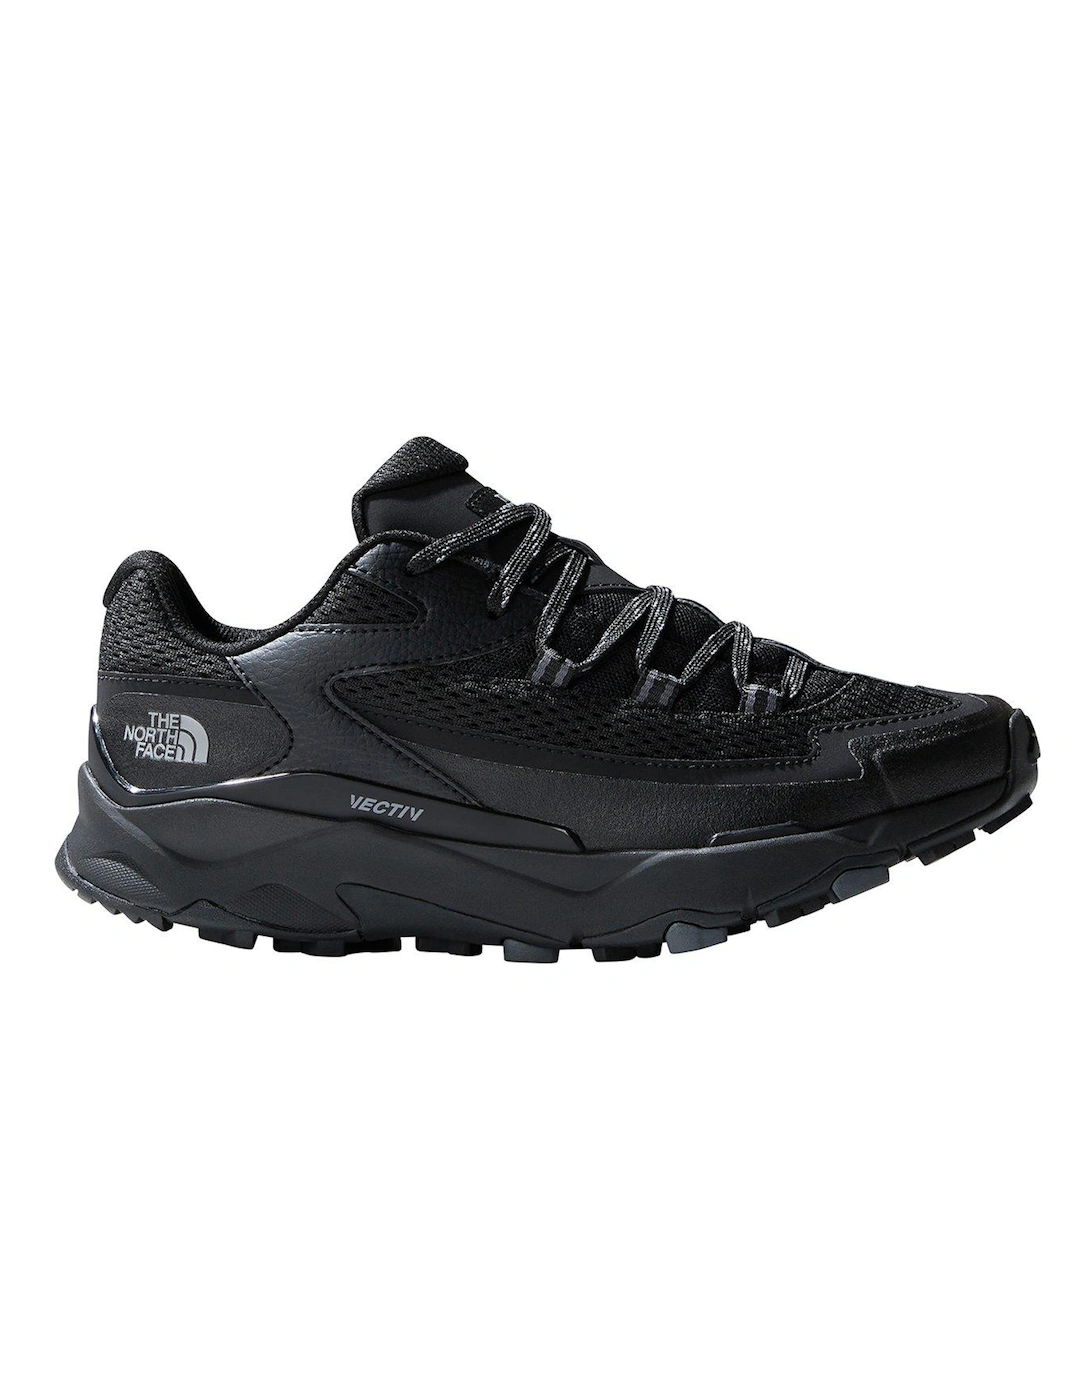 Womens Vectiv Taraval Hiking Shoes - Black, 3 of 2